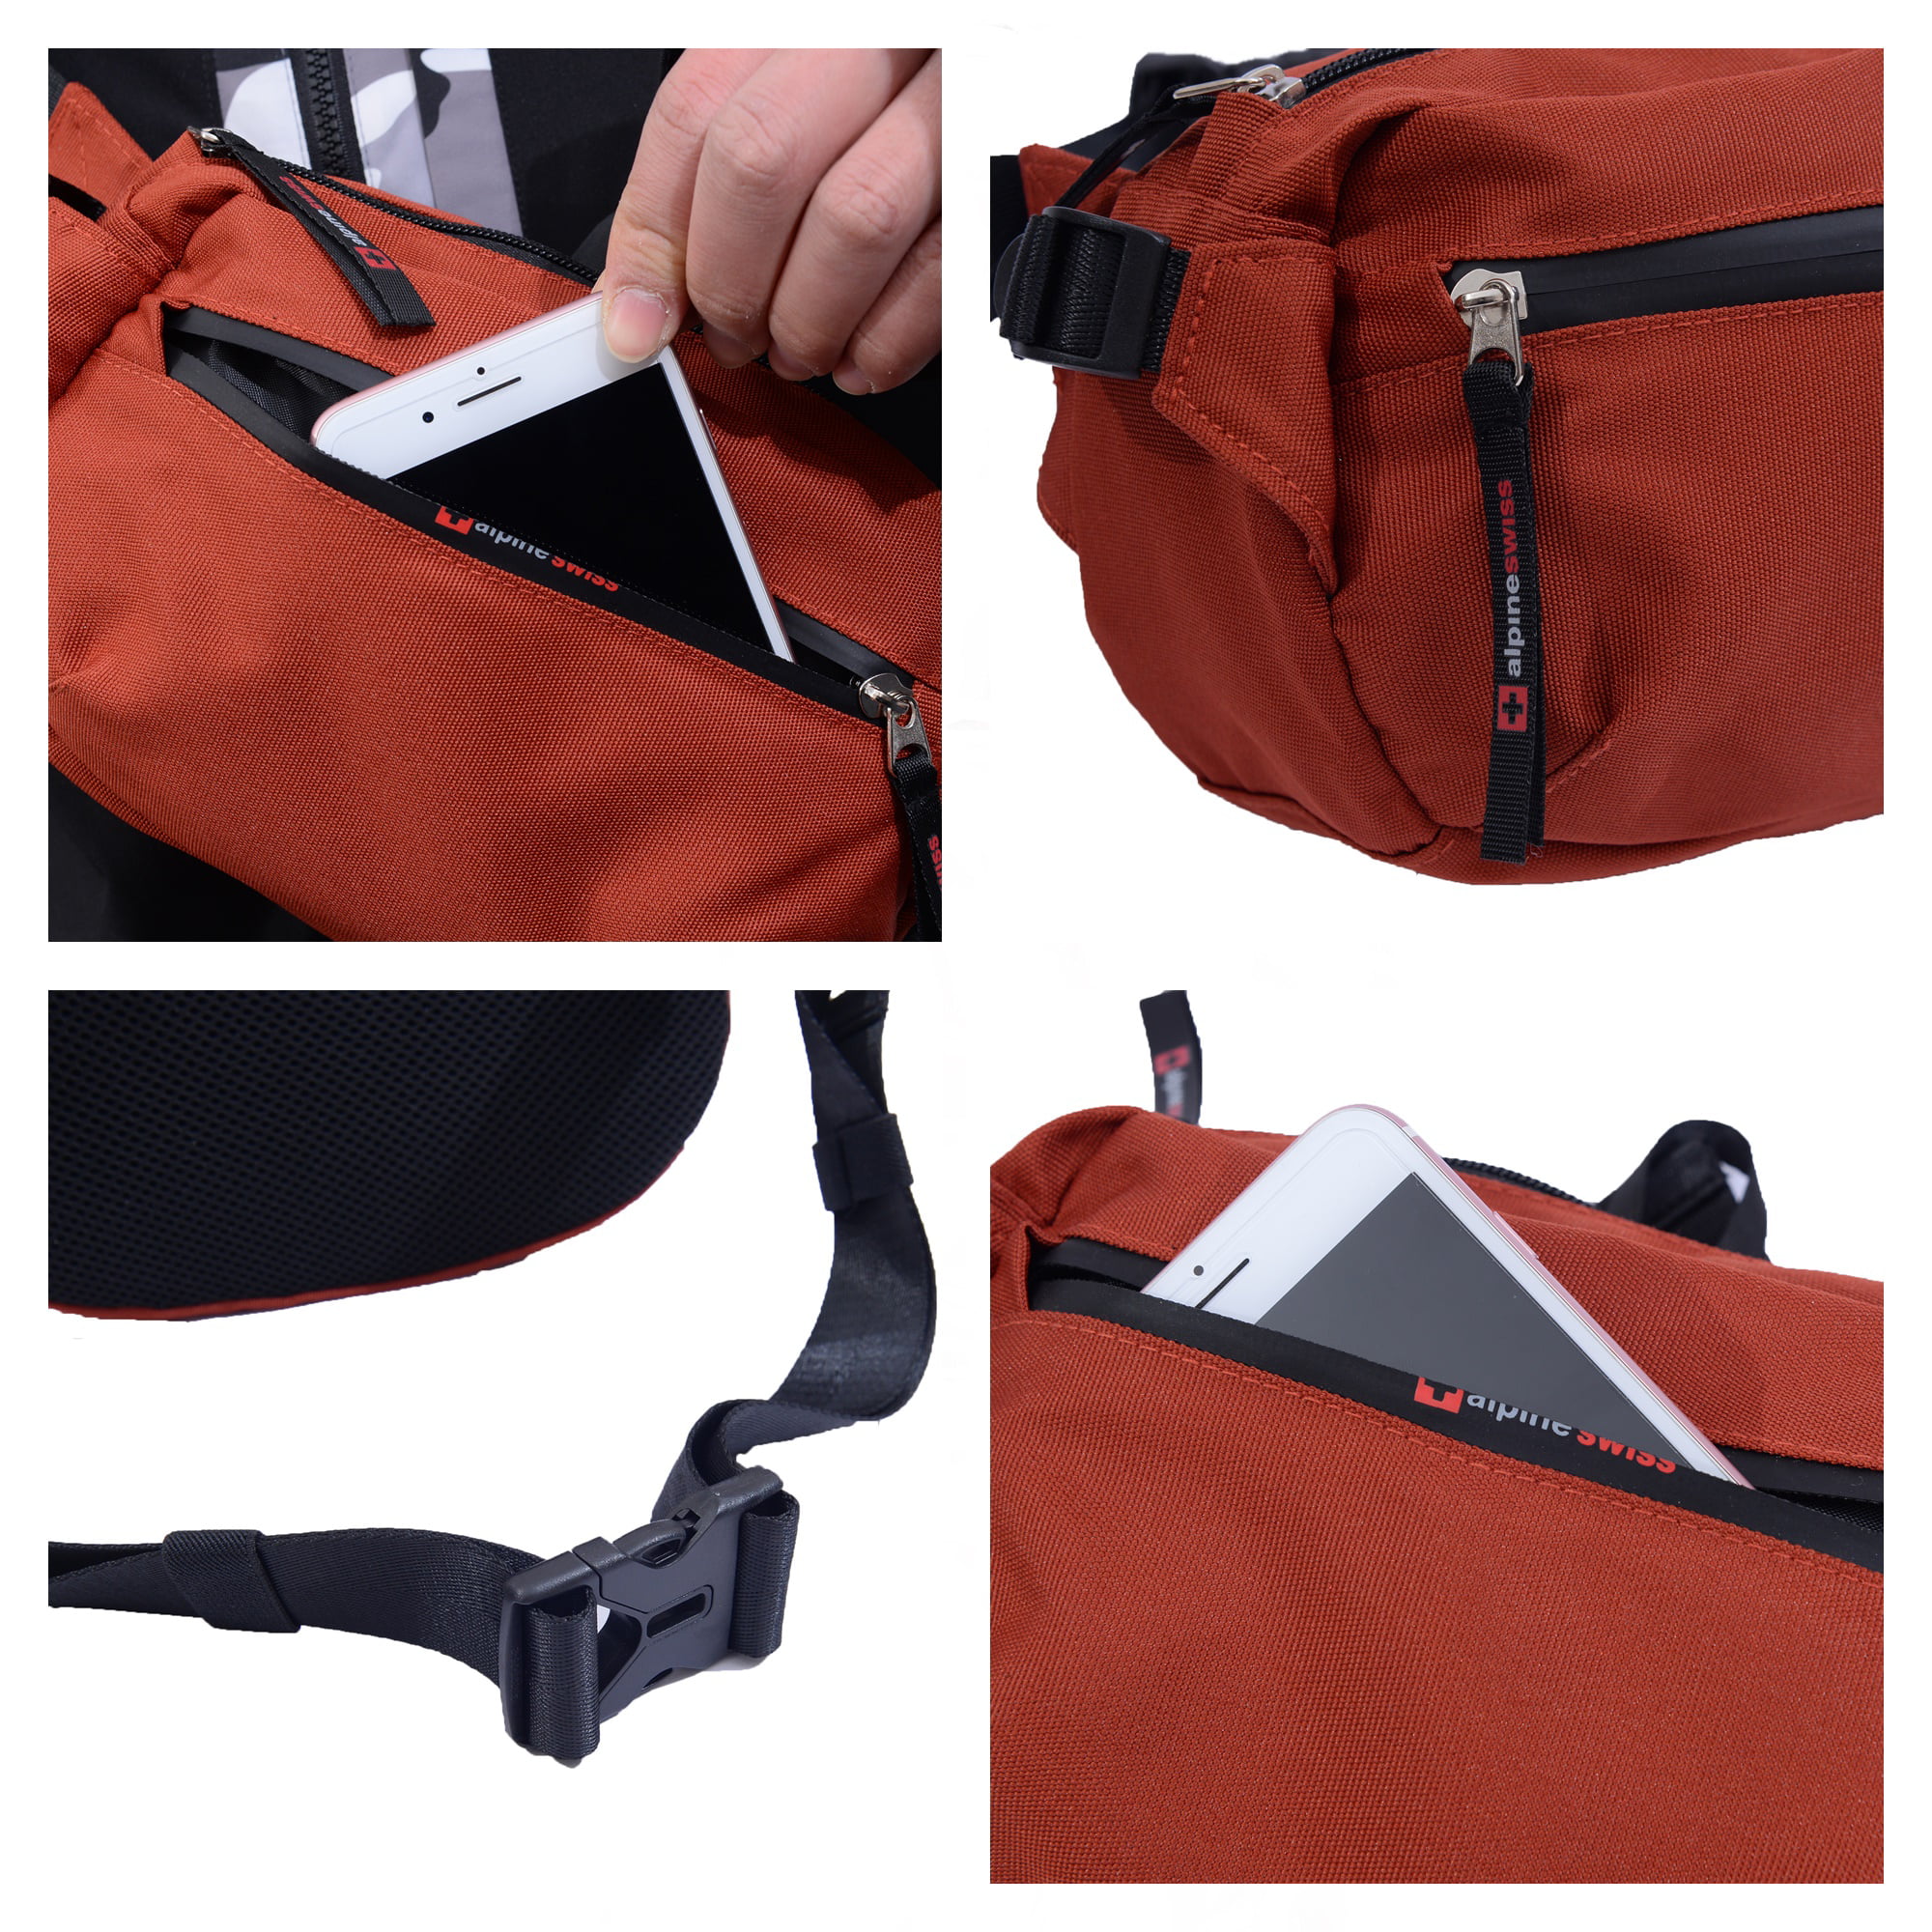 Alpine Swiss Fanny Pack Adjustable Waist Bag Sling Crossbody Chest Pack Bum Bag - Yellow